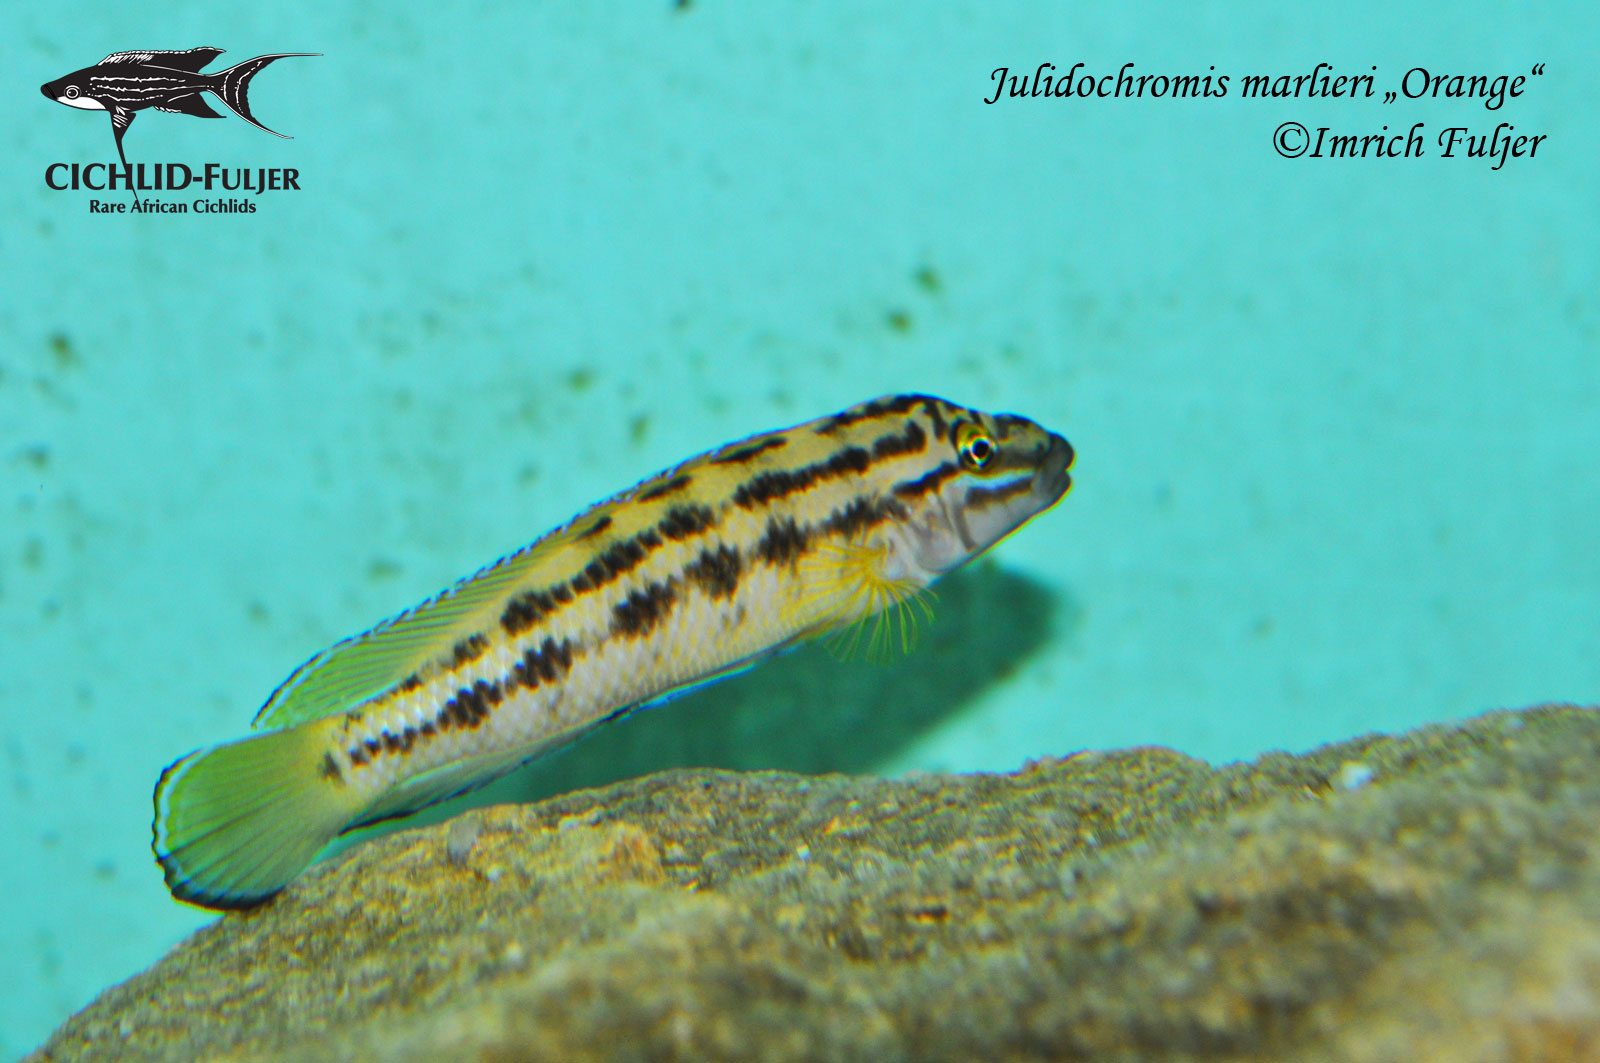 Julidochromis marlieri „Orange“